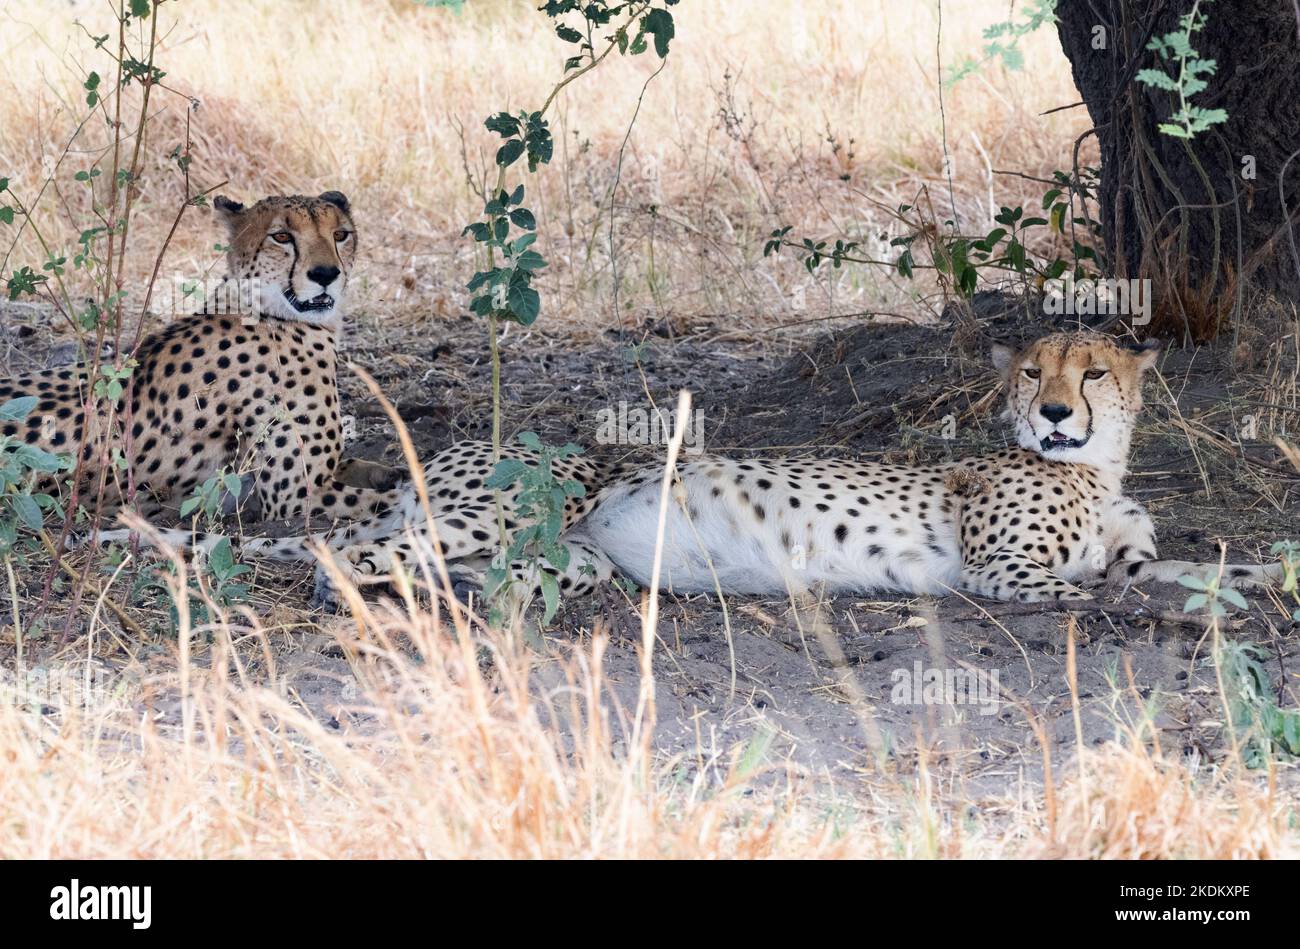 Two adult male cheetahs, Acinonyx jubatus in the wild, Chobe National Park, Botswana Africa. Cheetah is a big cat and Endangered animal. Stock Photo